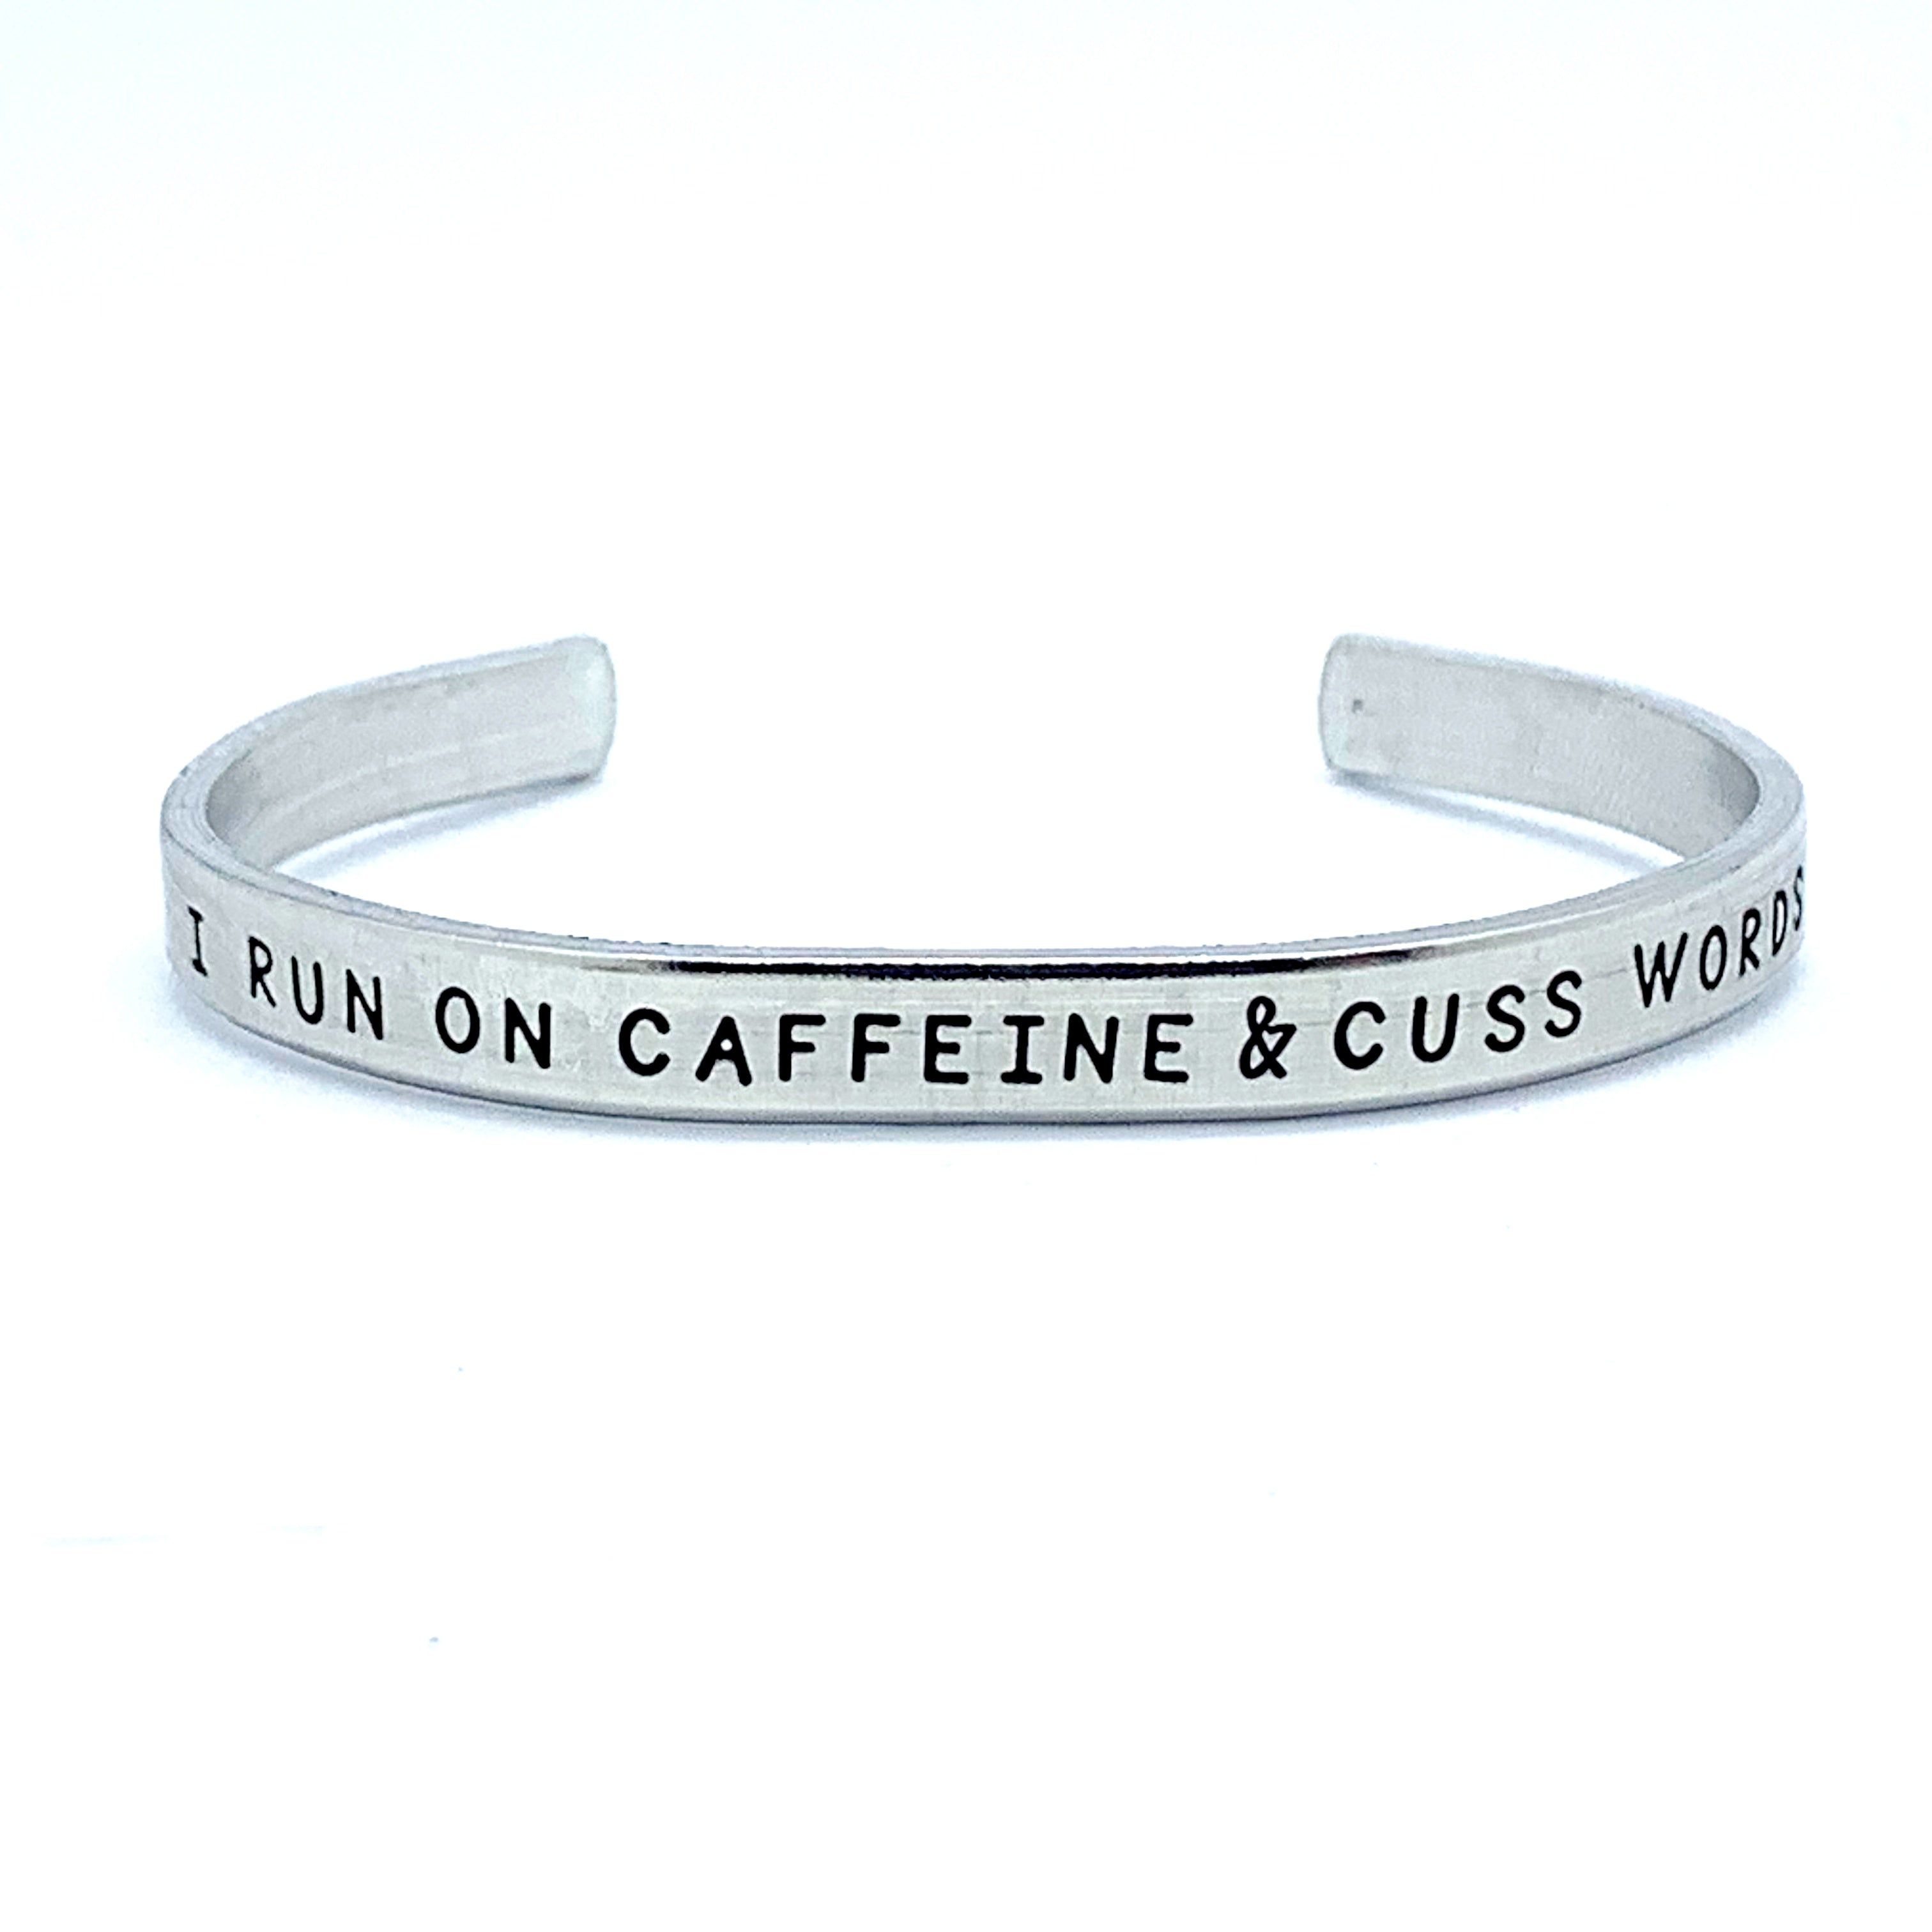 ¼ inch Aluminum Cuff -  I Run On Caffeine And Cuss Words